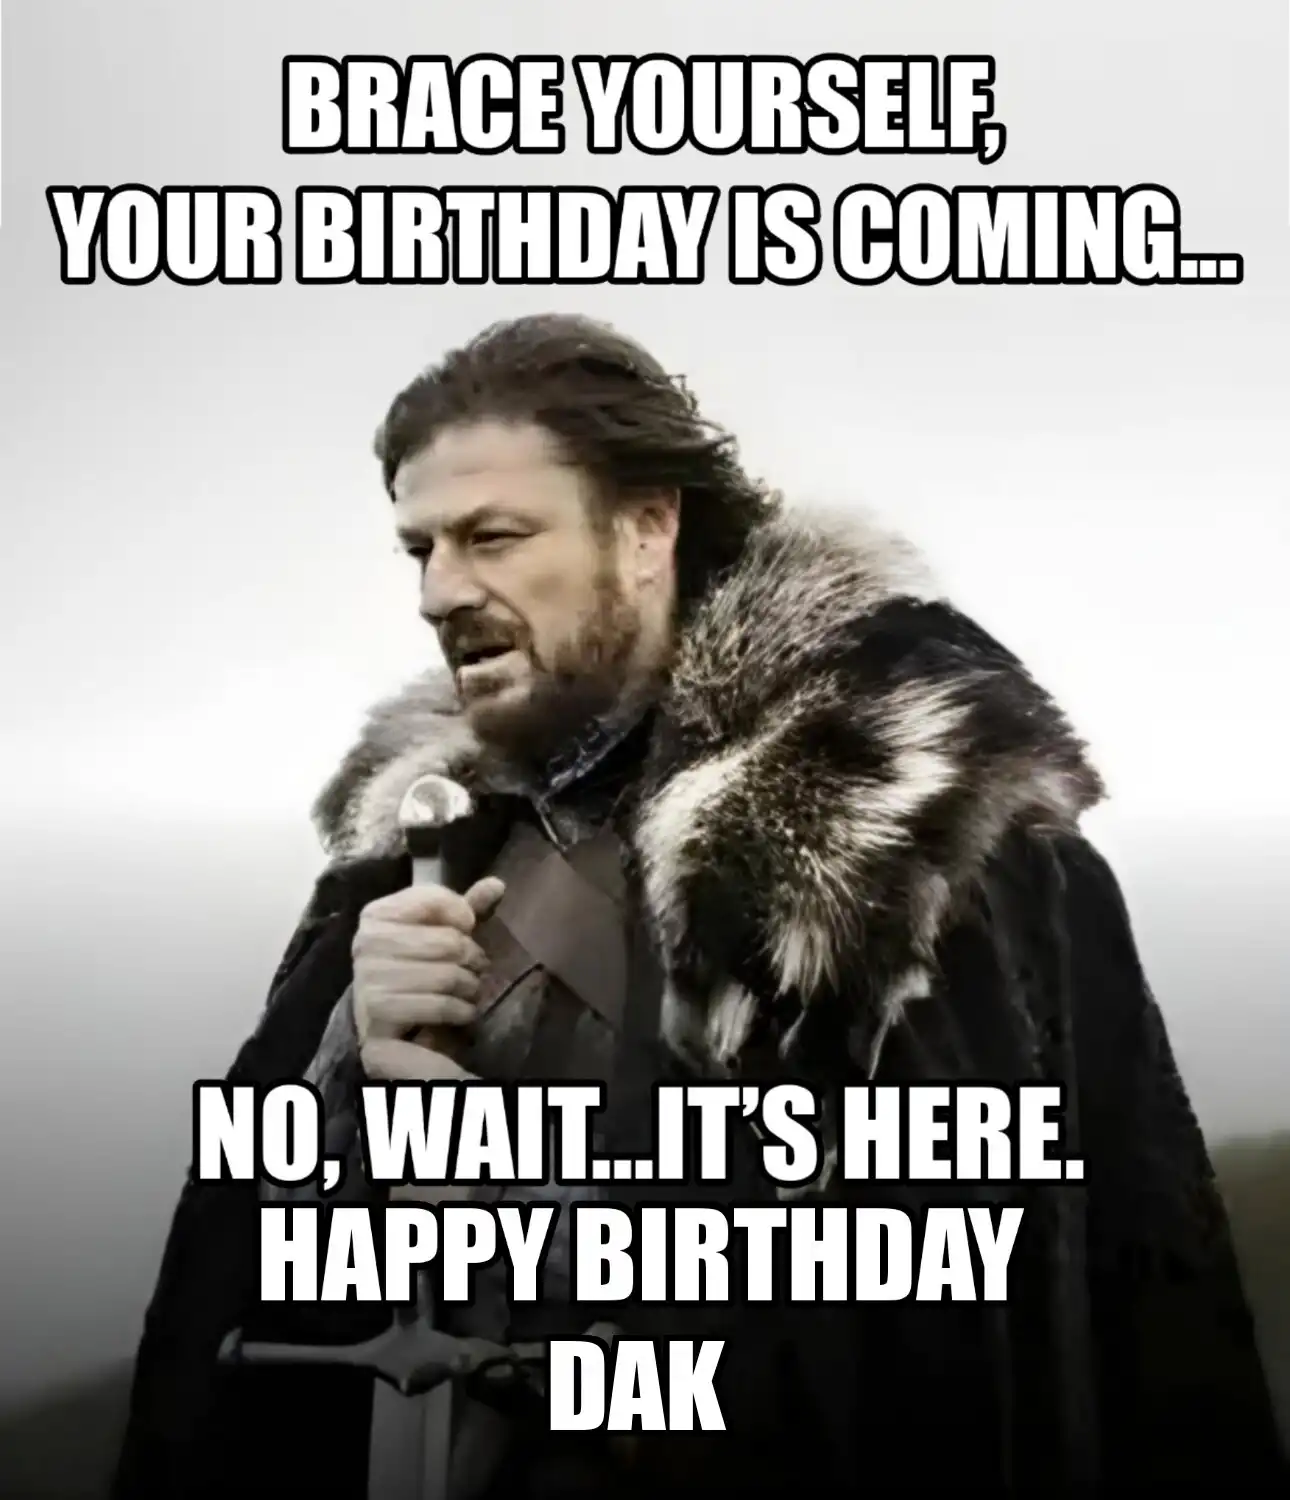 Happy Birthday Dak Brace Yourself Your Birthday Is Coming Meme